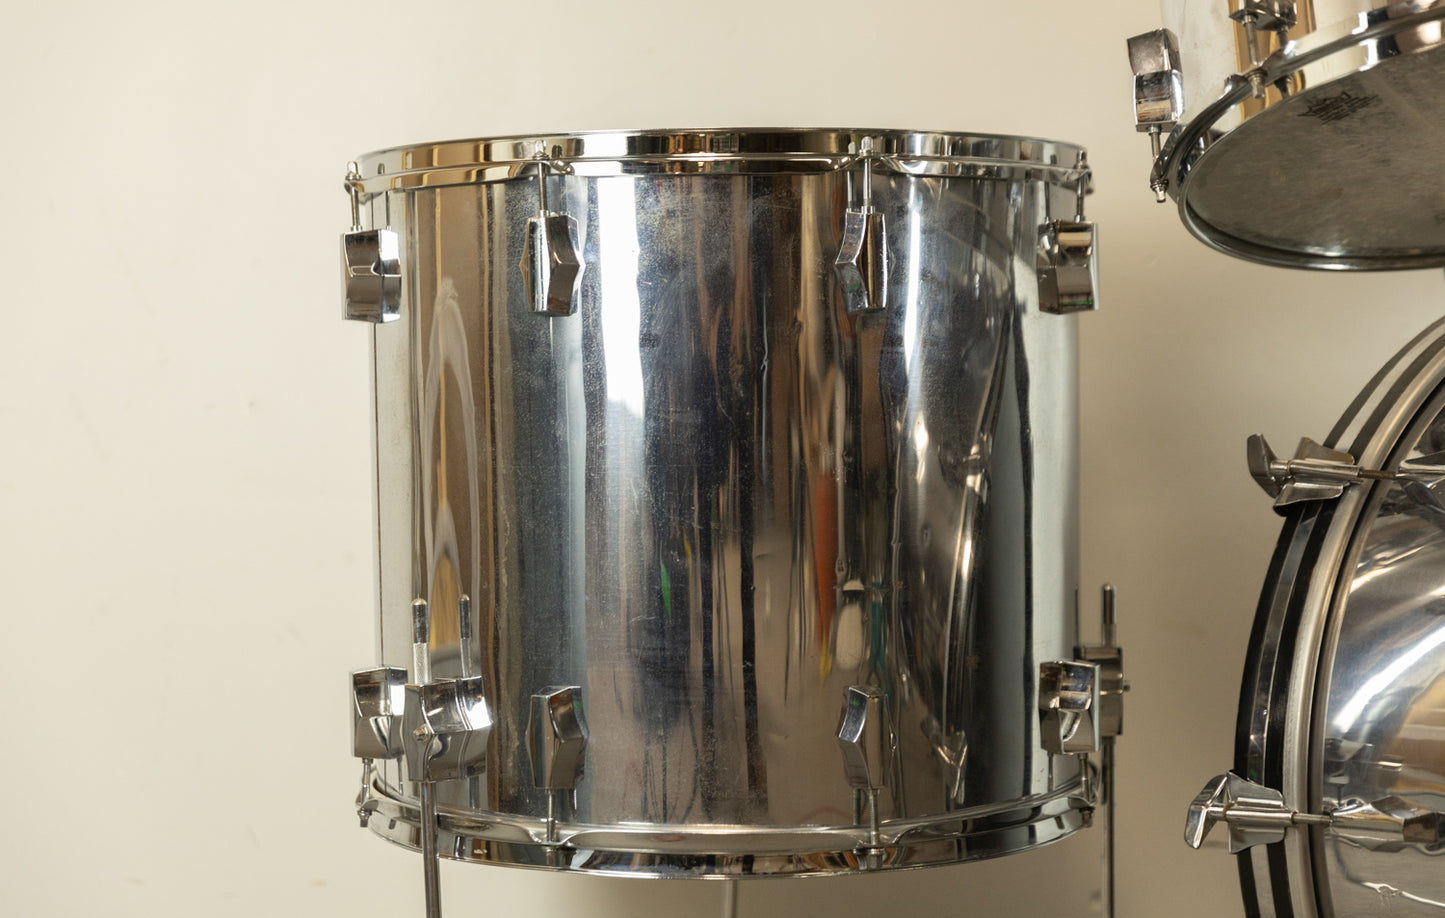 1970s Fibes "Mark II" Chrome Drum Set